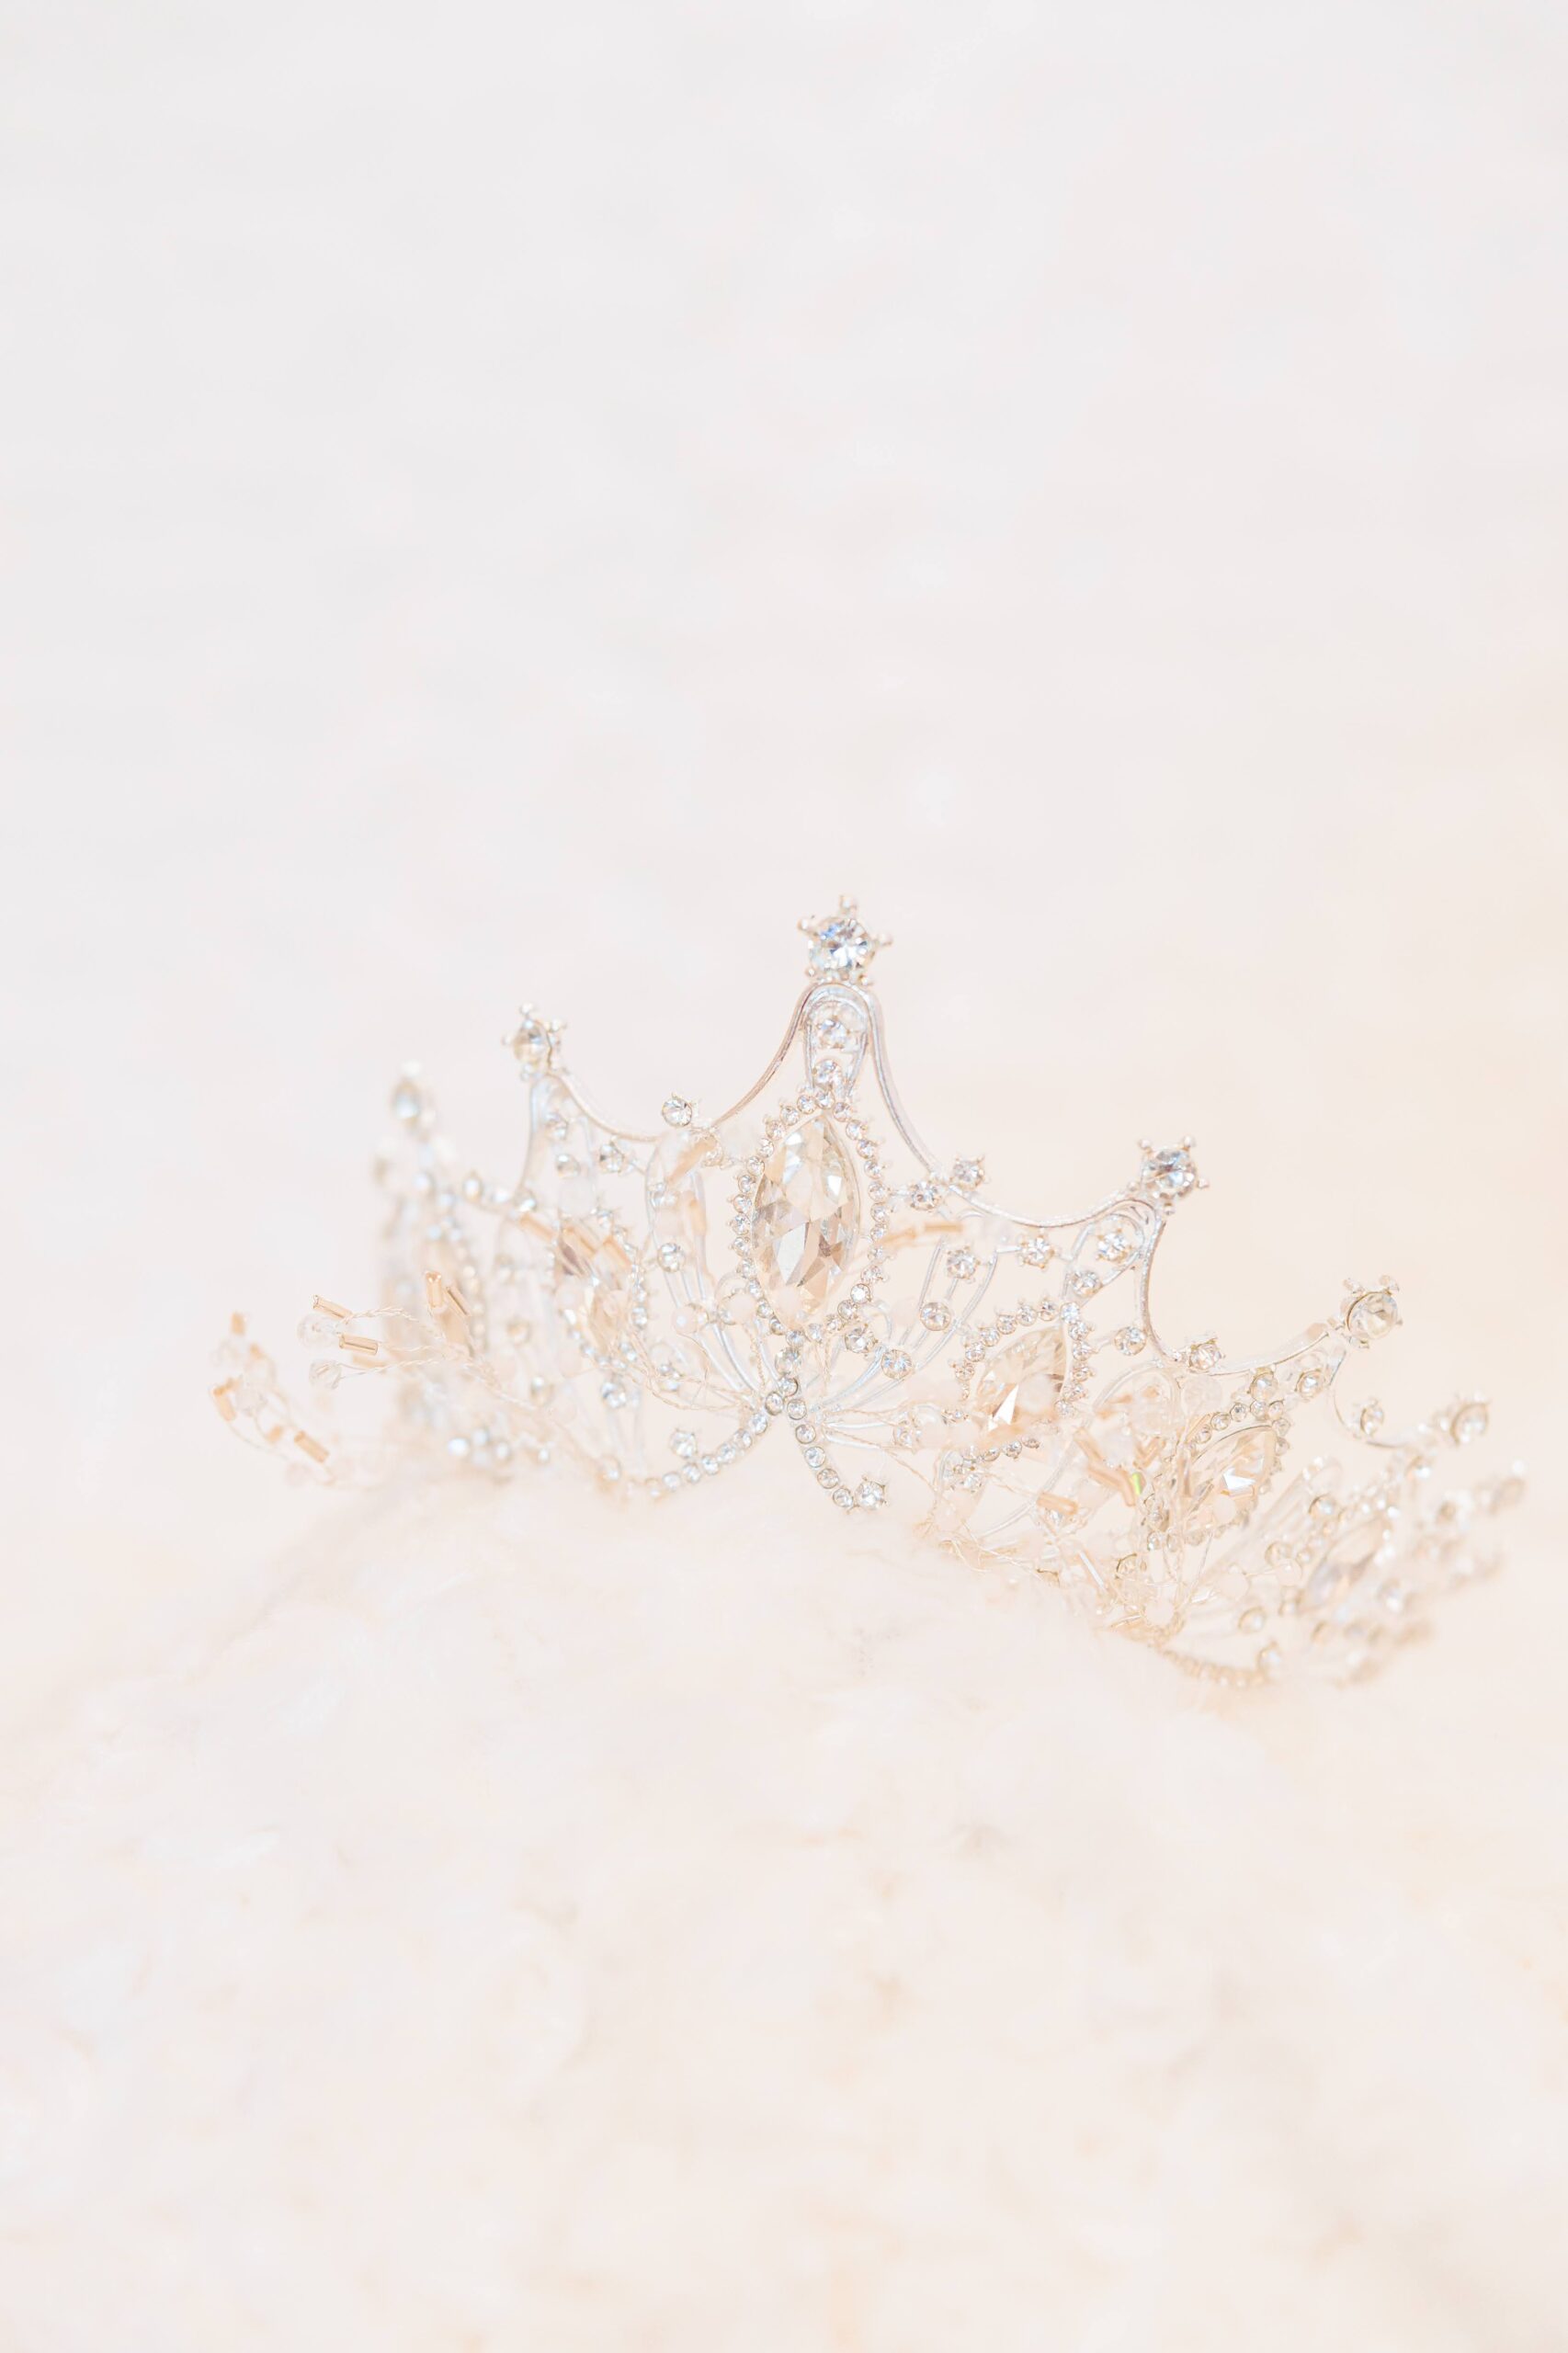 A winter wonderland wedding tiara sits on the fuzzy white bridal shawl.